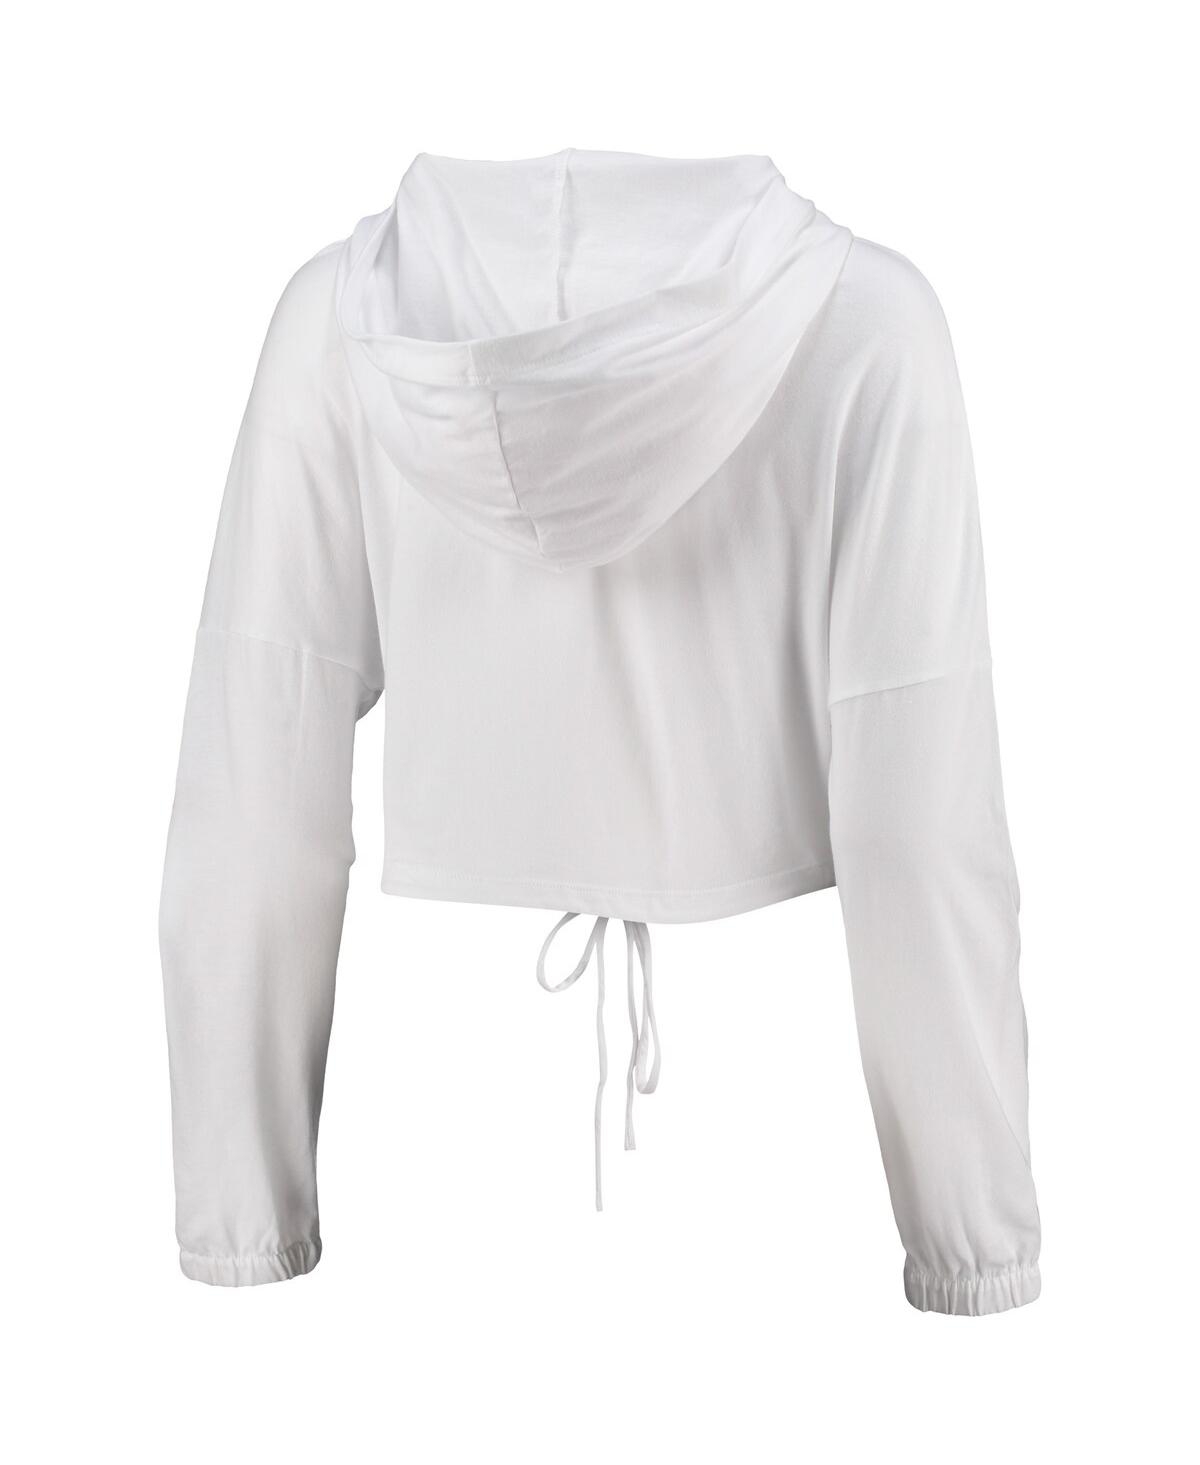 Shop Summit Sportswear Women's White Clemson Tigers Poppy Cinched Cropped Hoodie Long Sleeve T-shirt